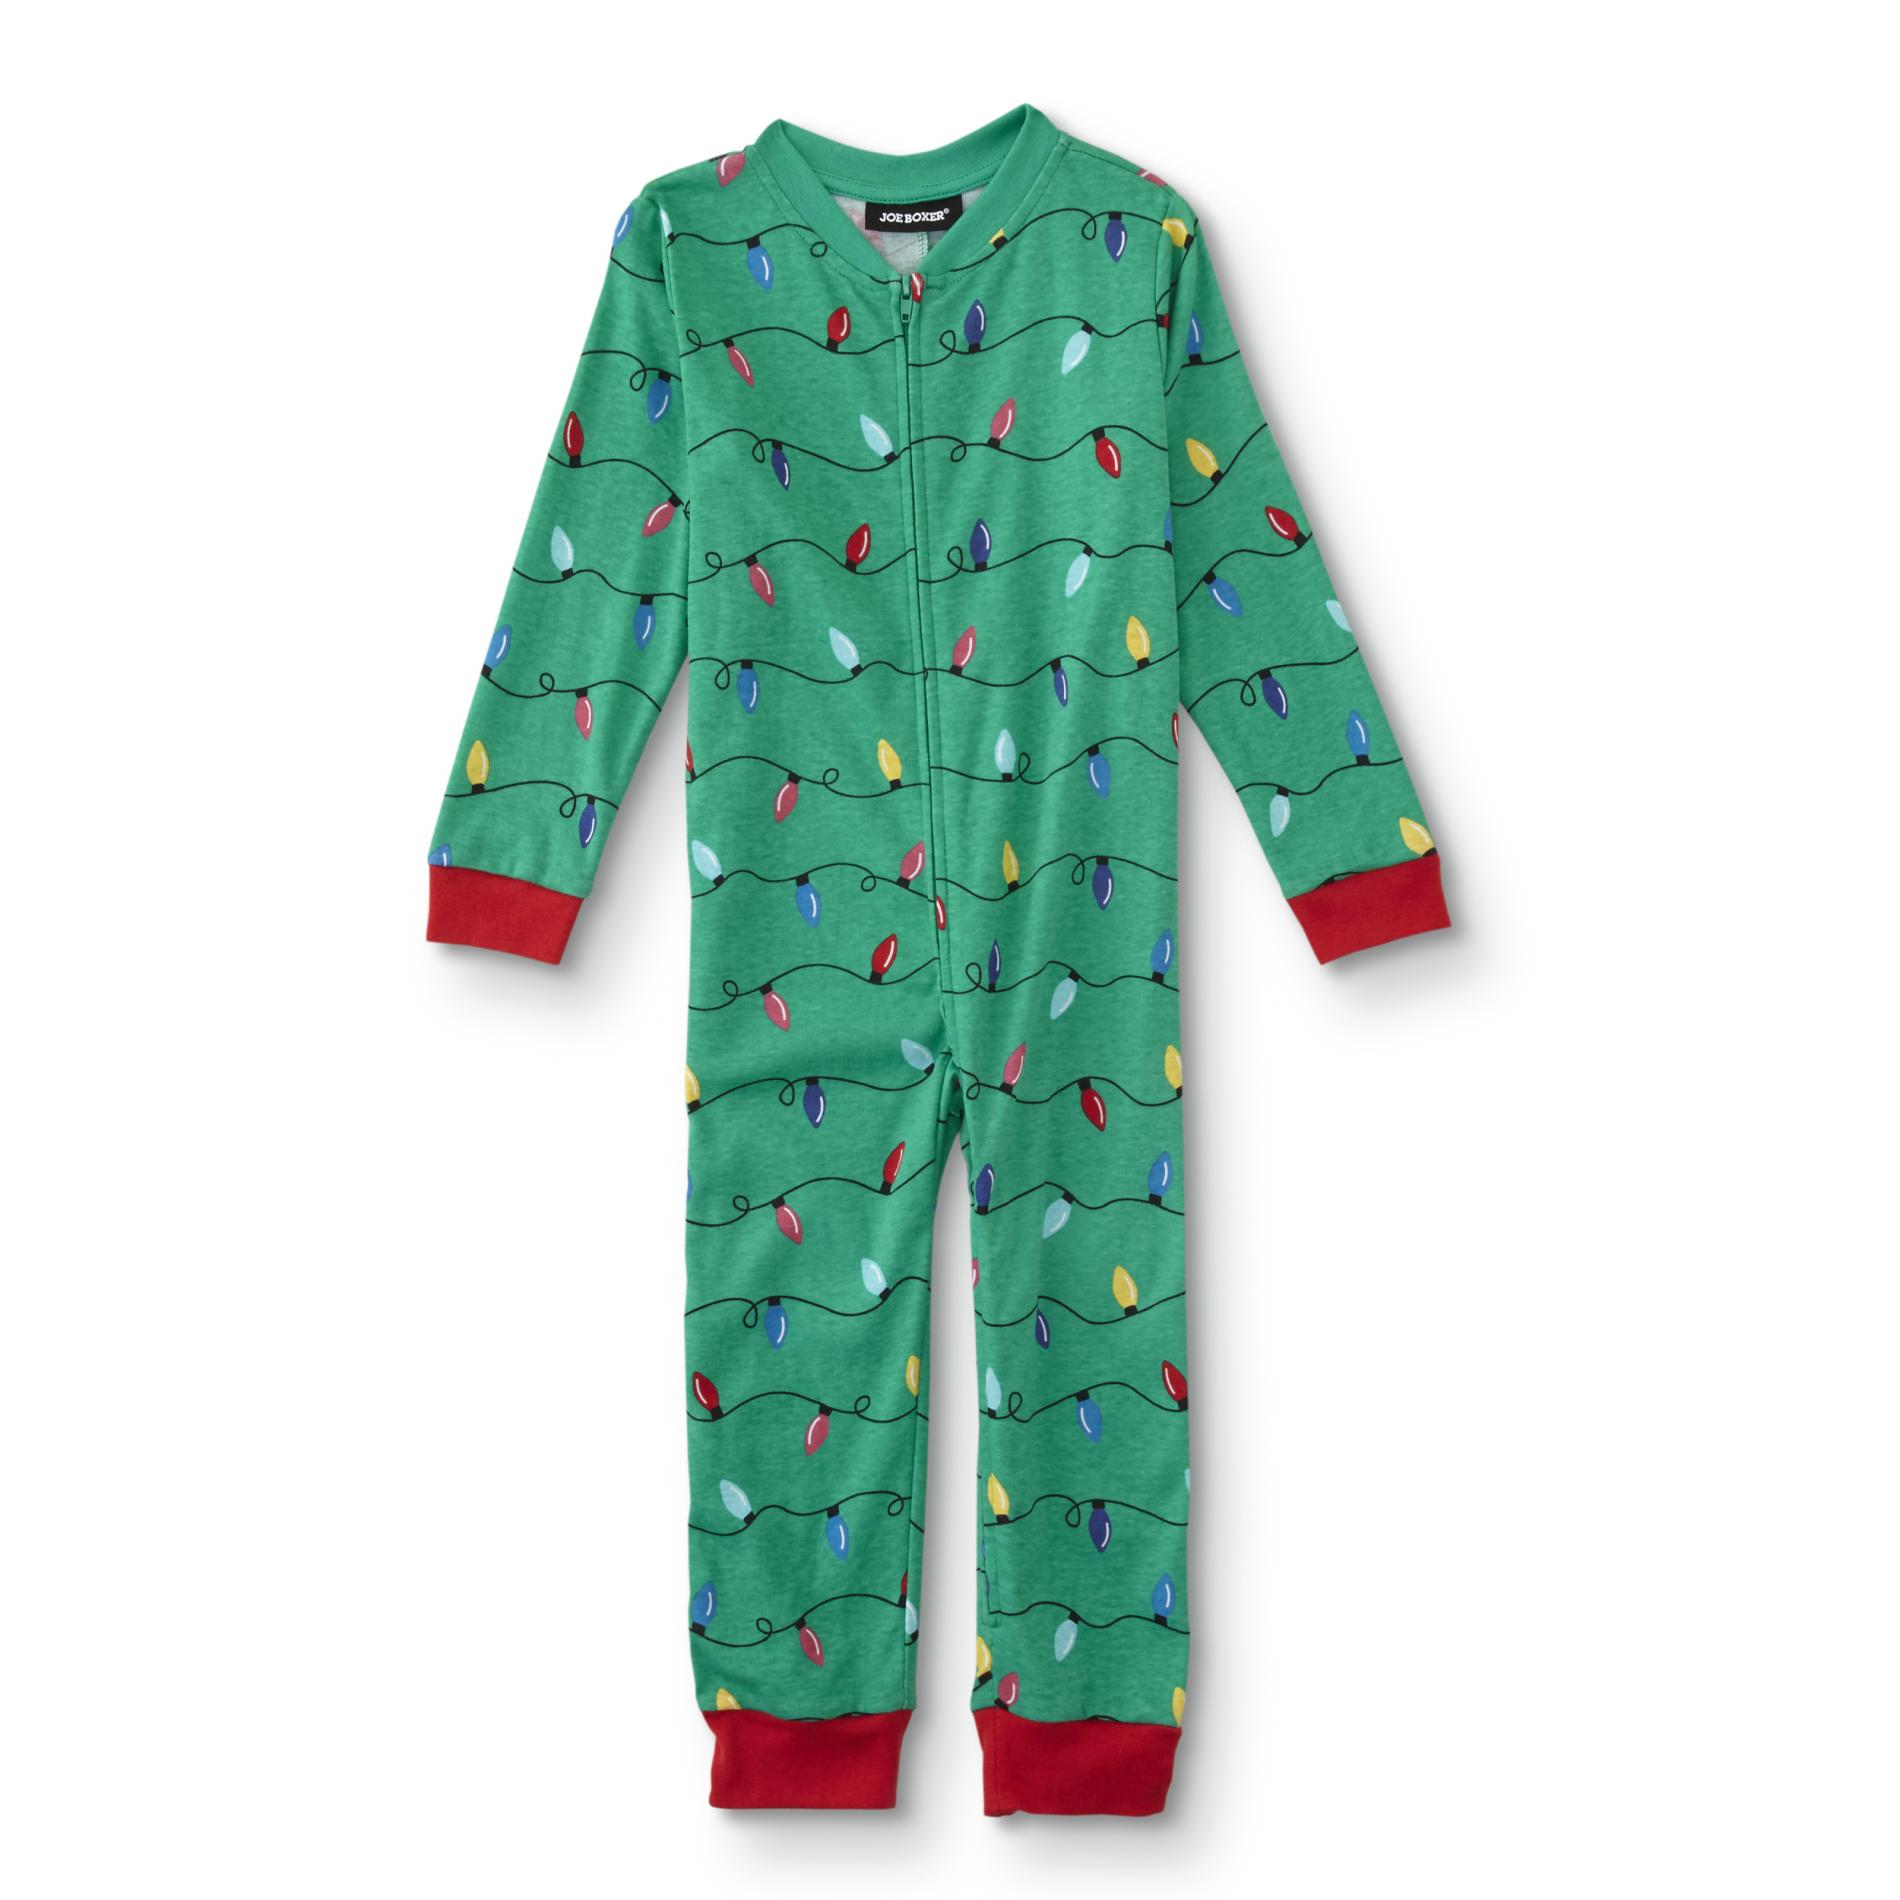 Joe Boxer Infant & Toddlers' Christmas One-Piece Pajamas - Lights